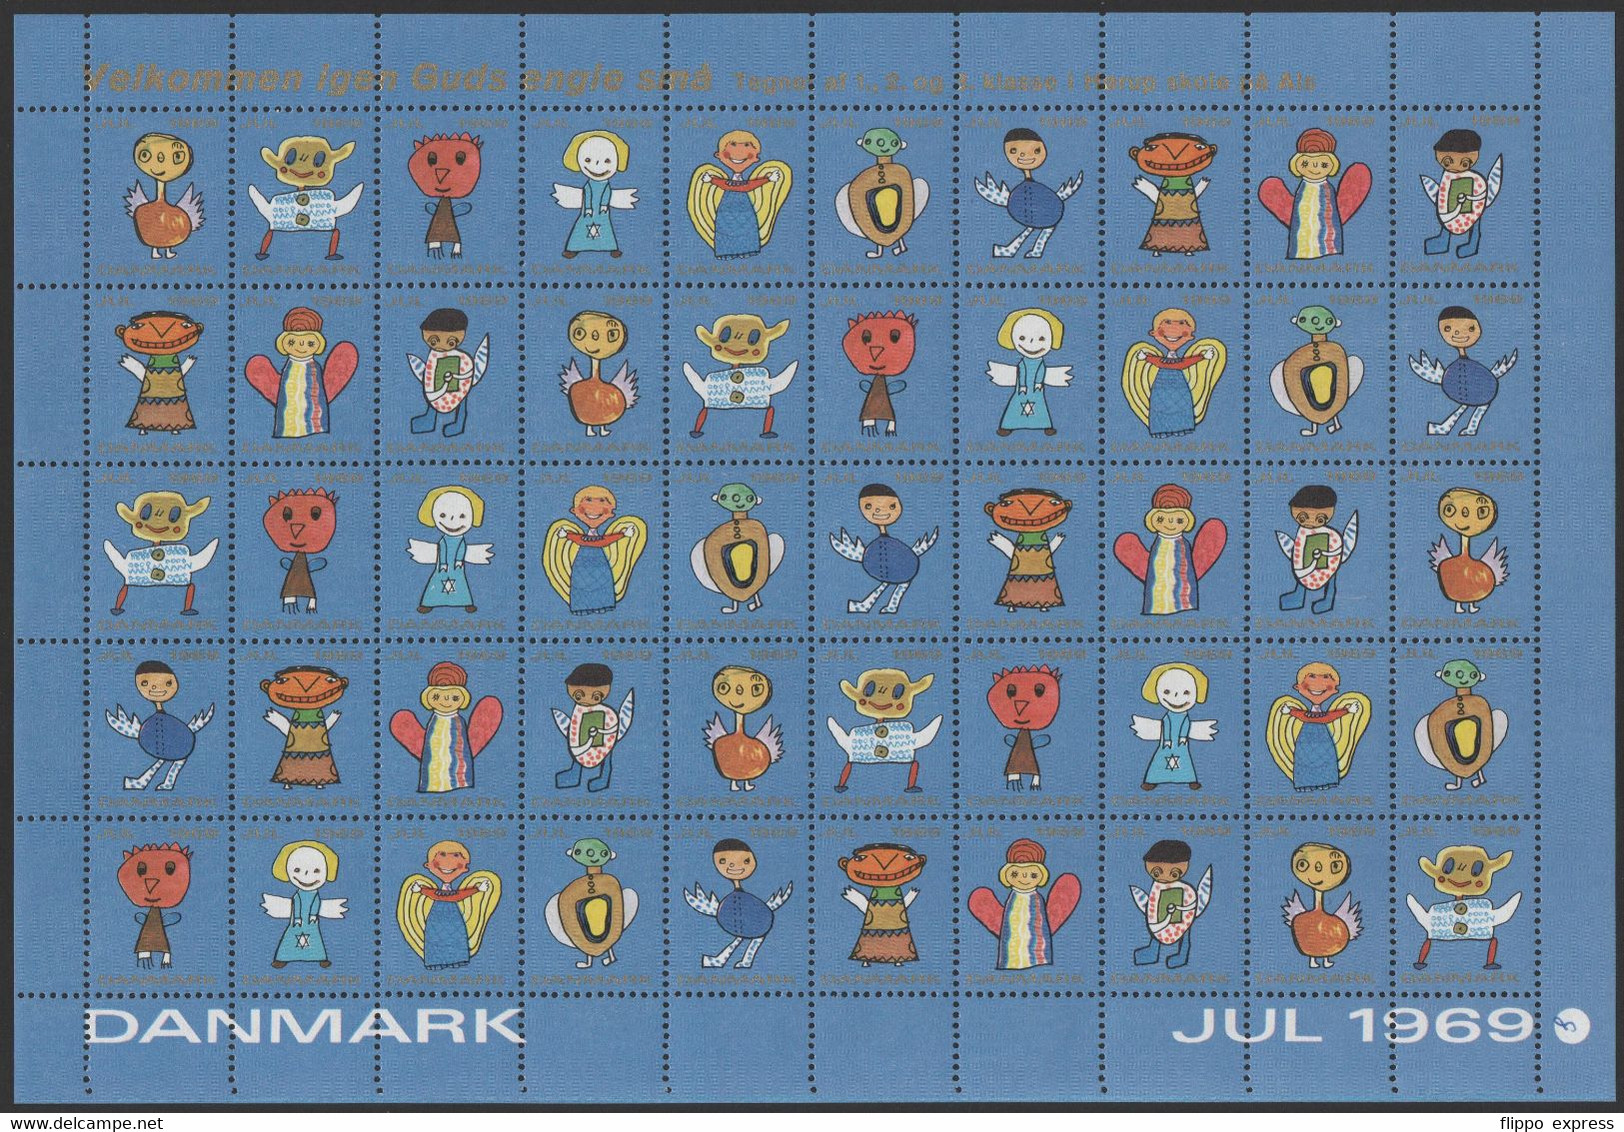 Denmark1969 Julemaerke, Mint Sheet Of 50 Stamps, Unfolded. - Fogli Completi